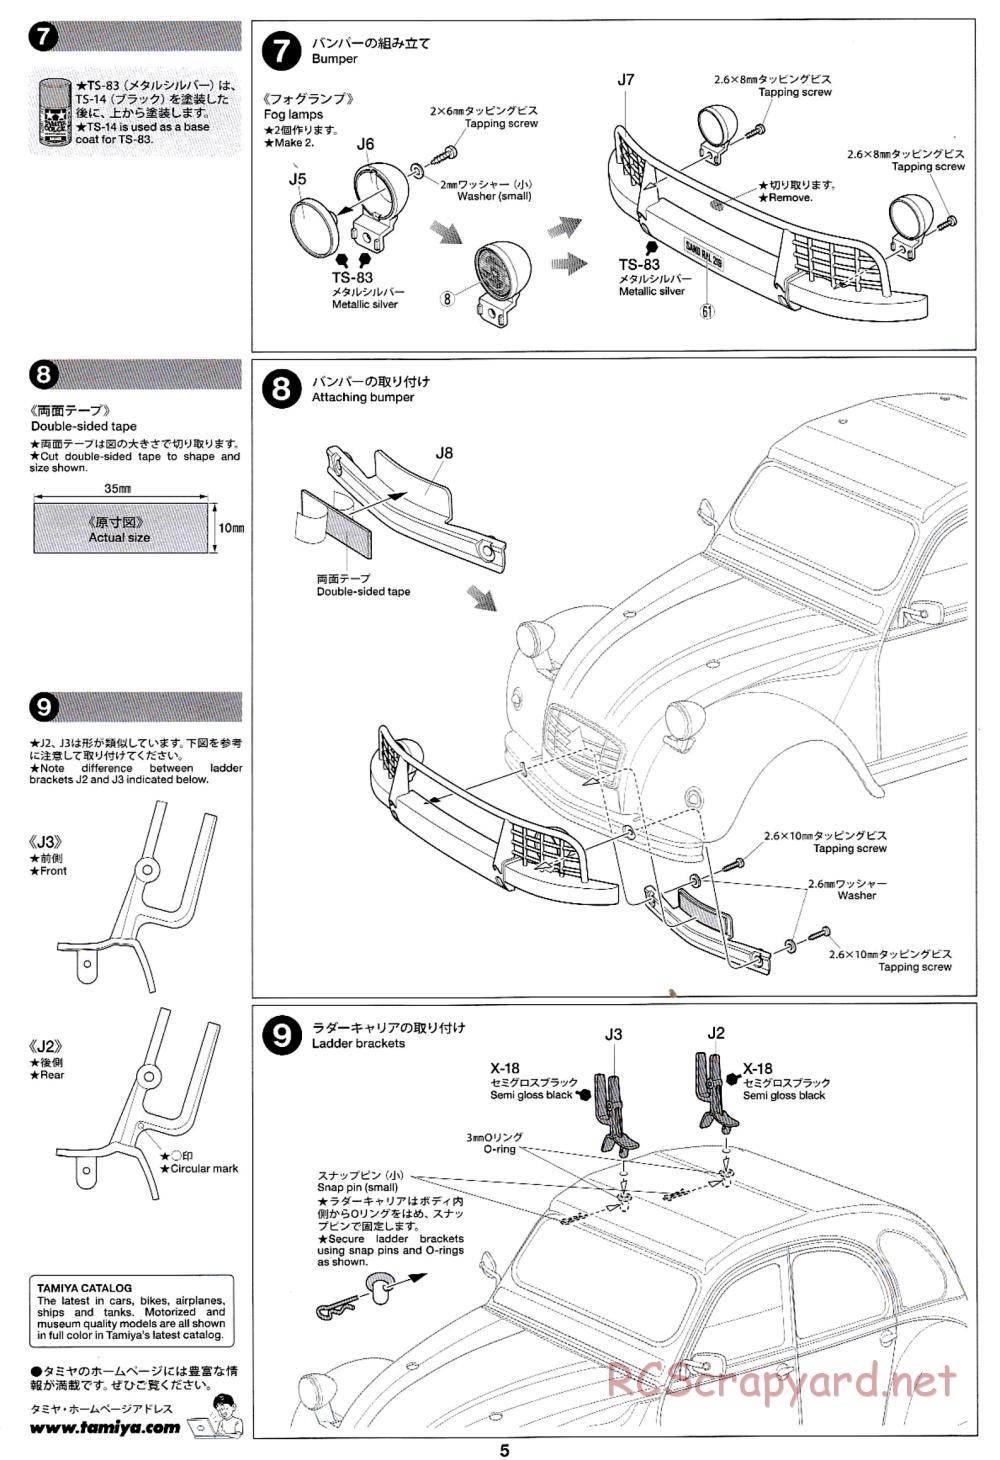 Tamiya - Citroen 2CV Rally - M-05Ra Chassis - Body Manual - Page 5